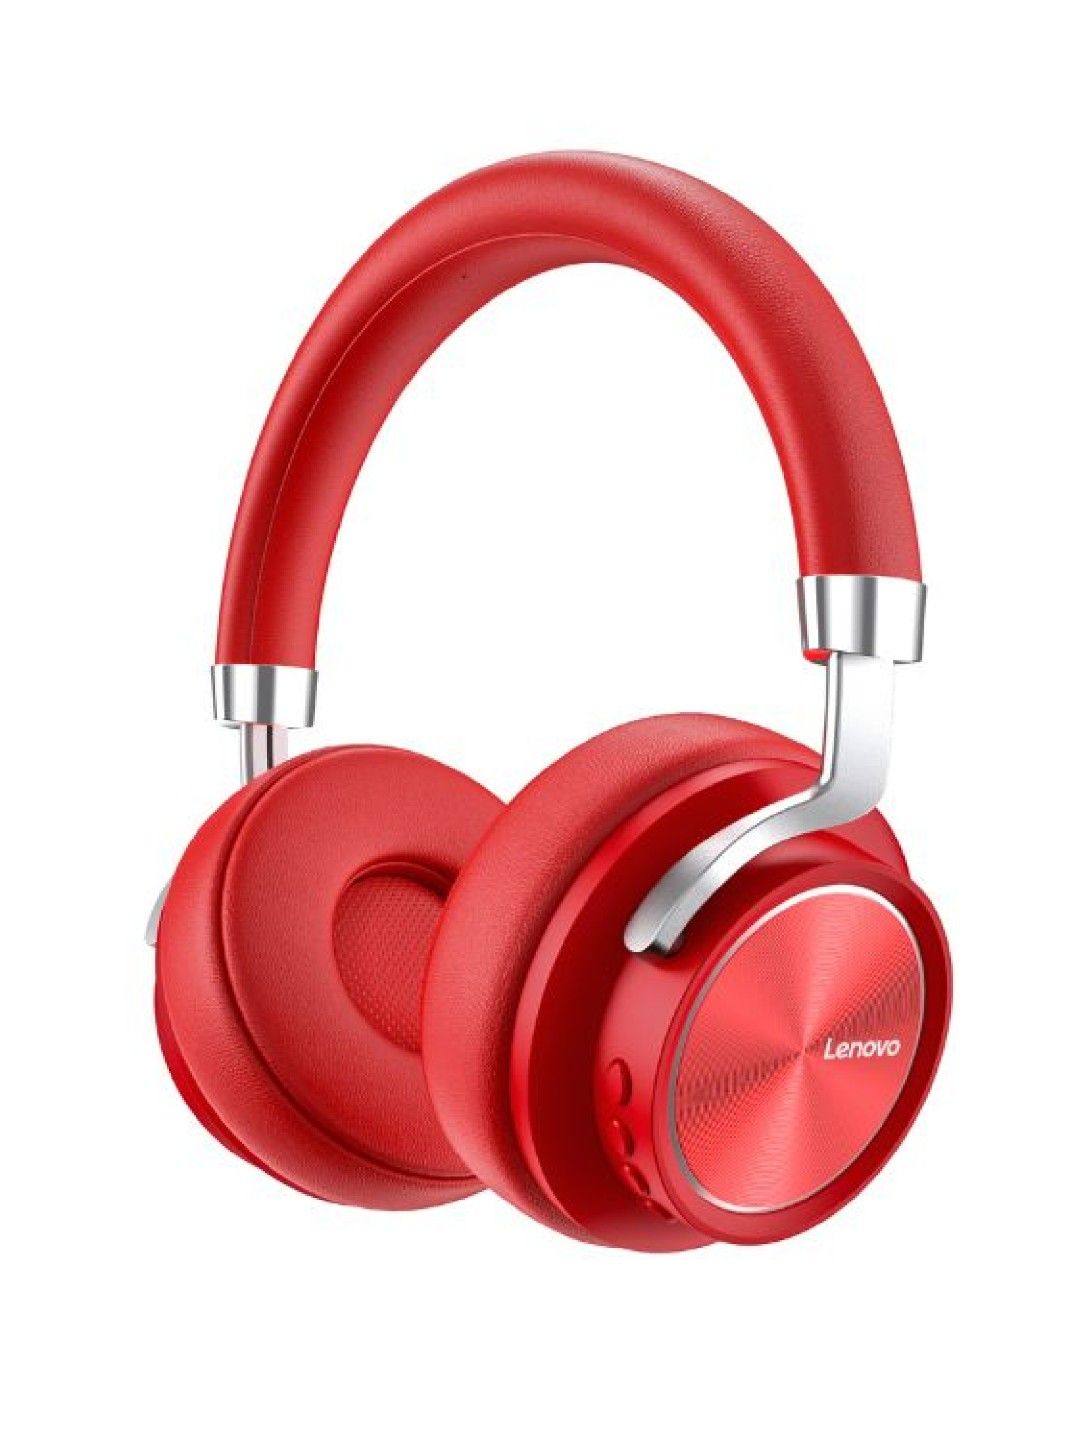 Lenovo HD800 Bluetooth Headphones (Red- Image 1)